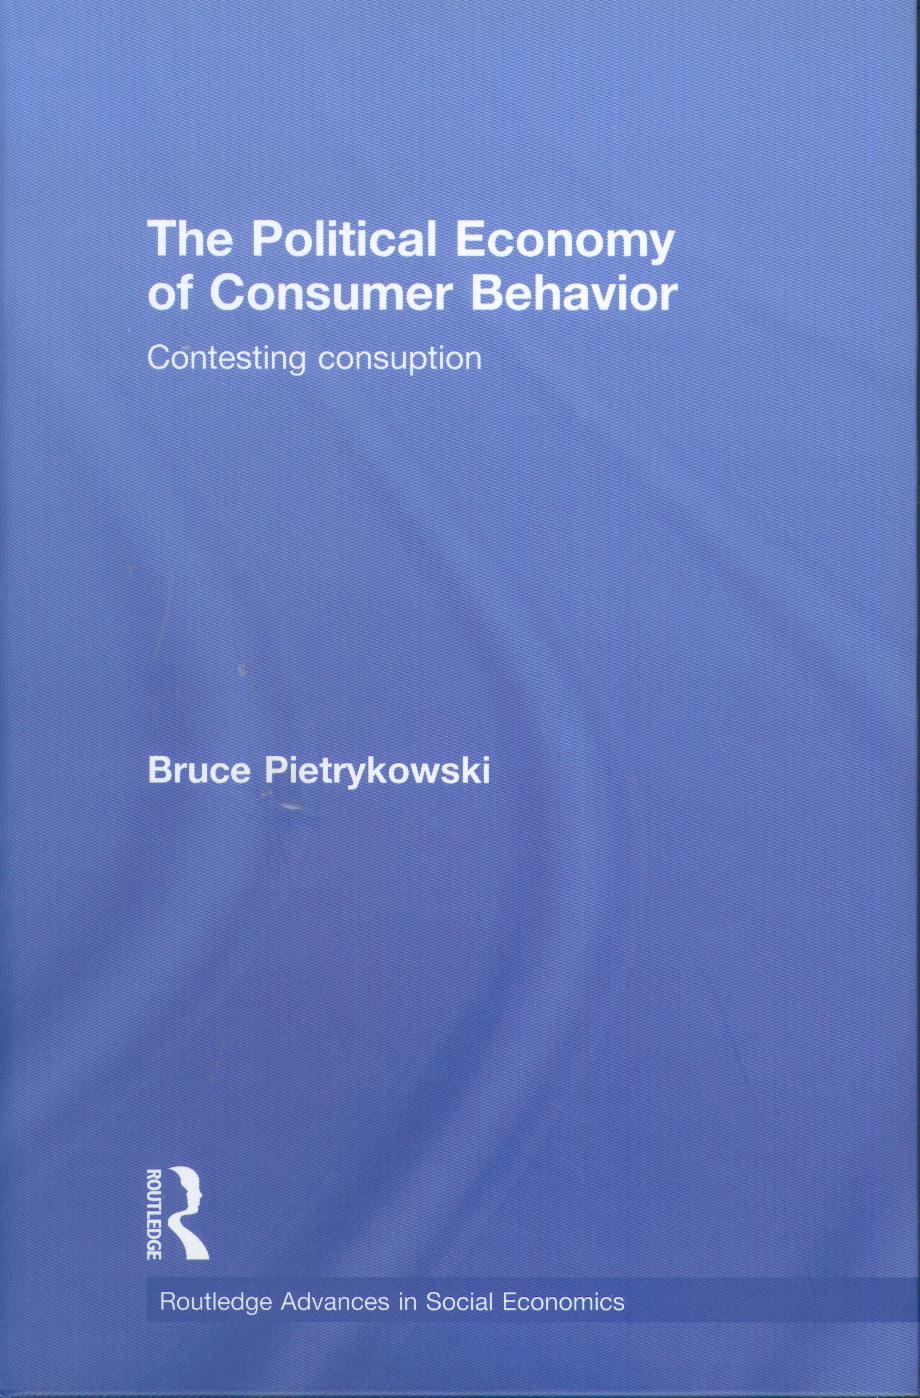 The Political Economy Of Consumer Behavior "Contesting Consumption". Contesting Consumption